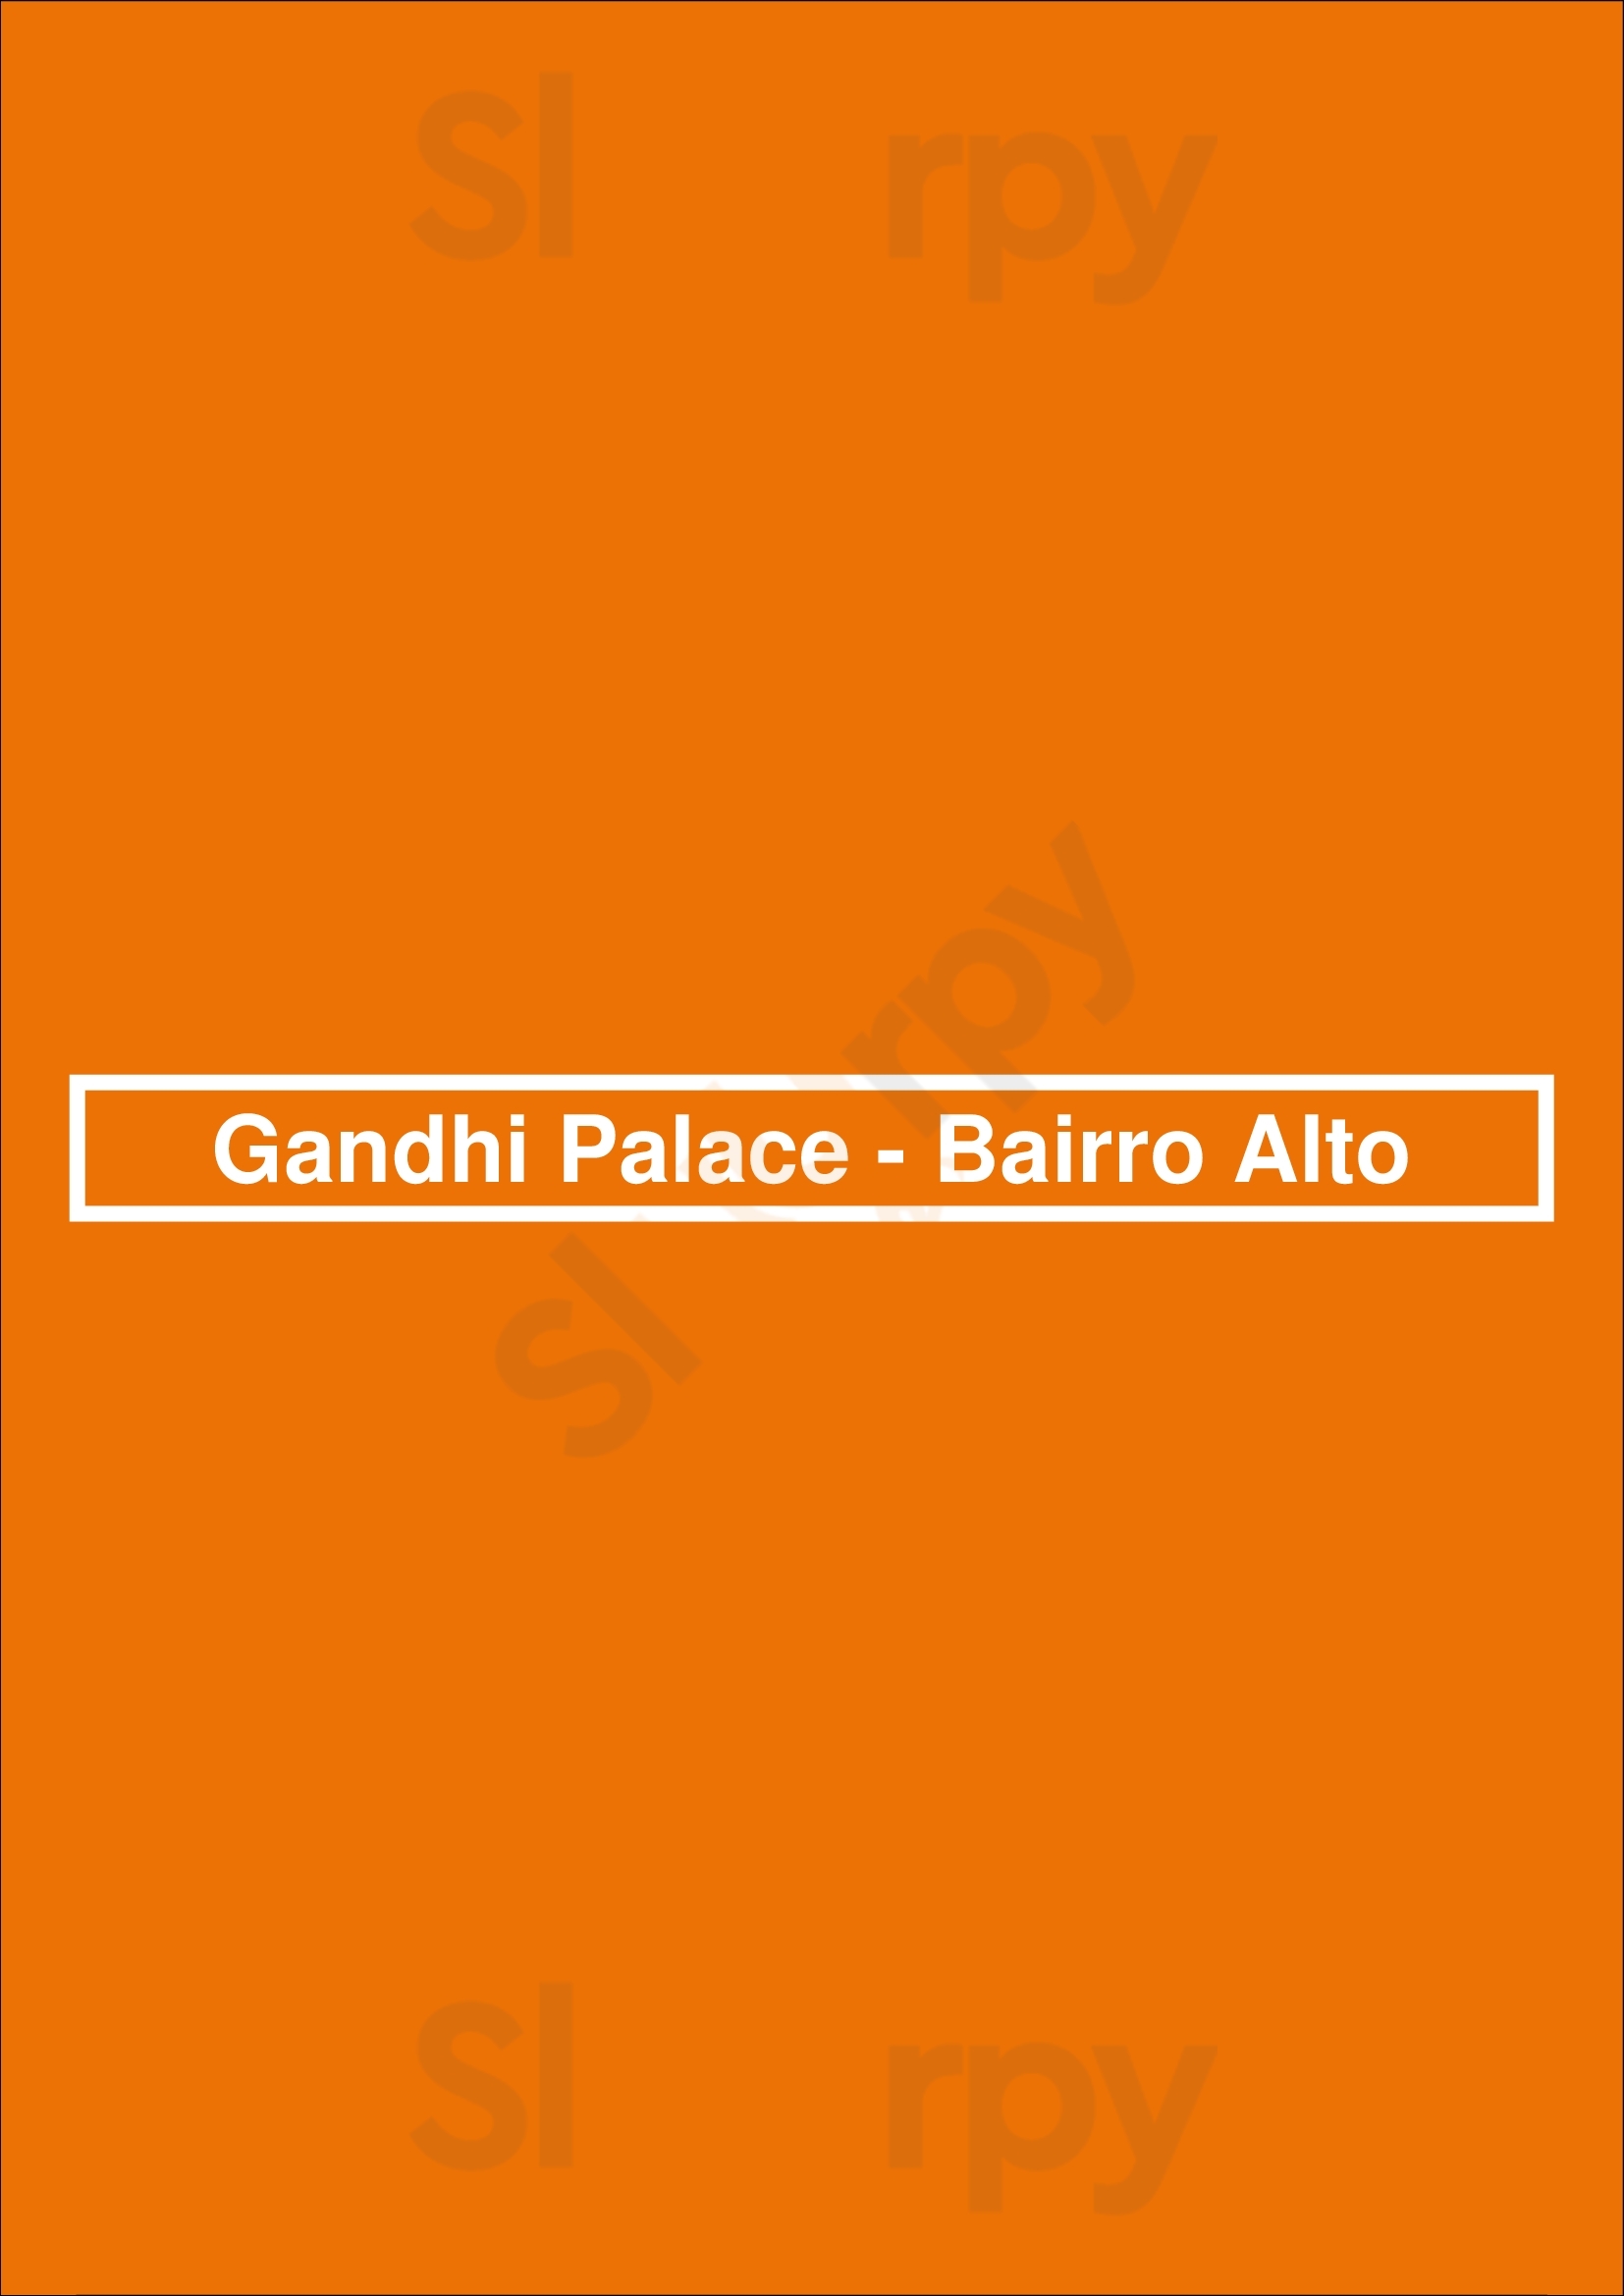 Gandhi Palace - Bairro Alto Lisboa Menu - 1